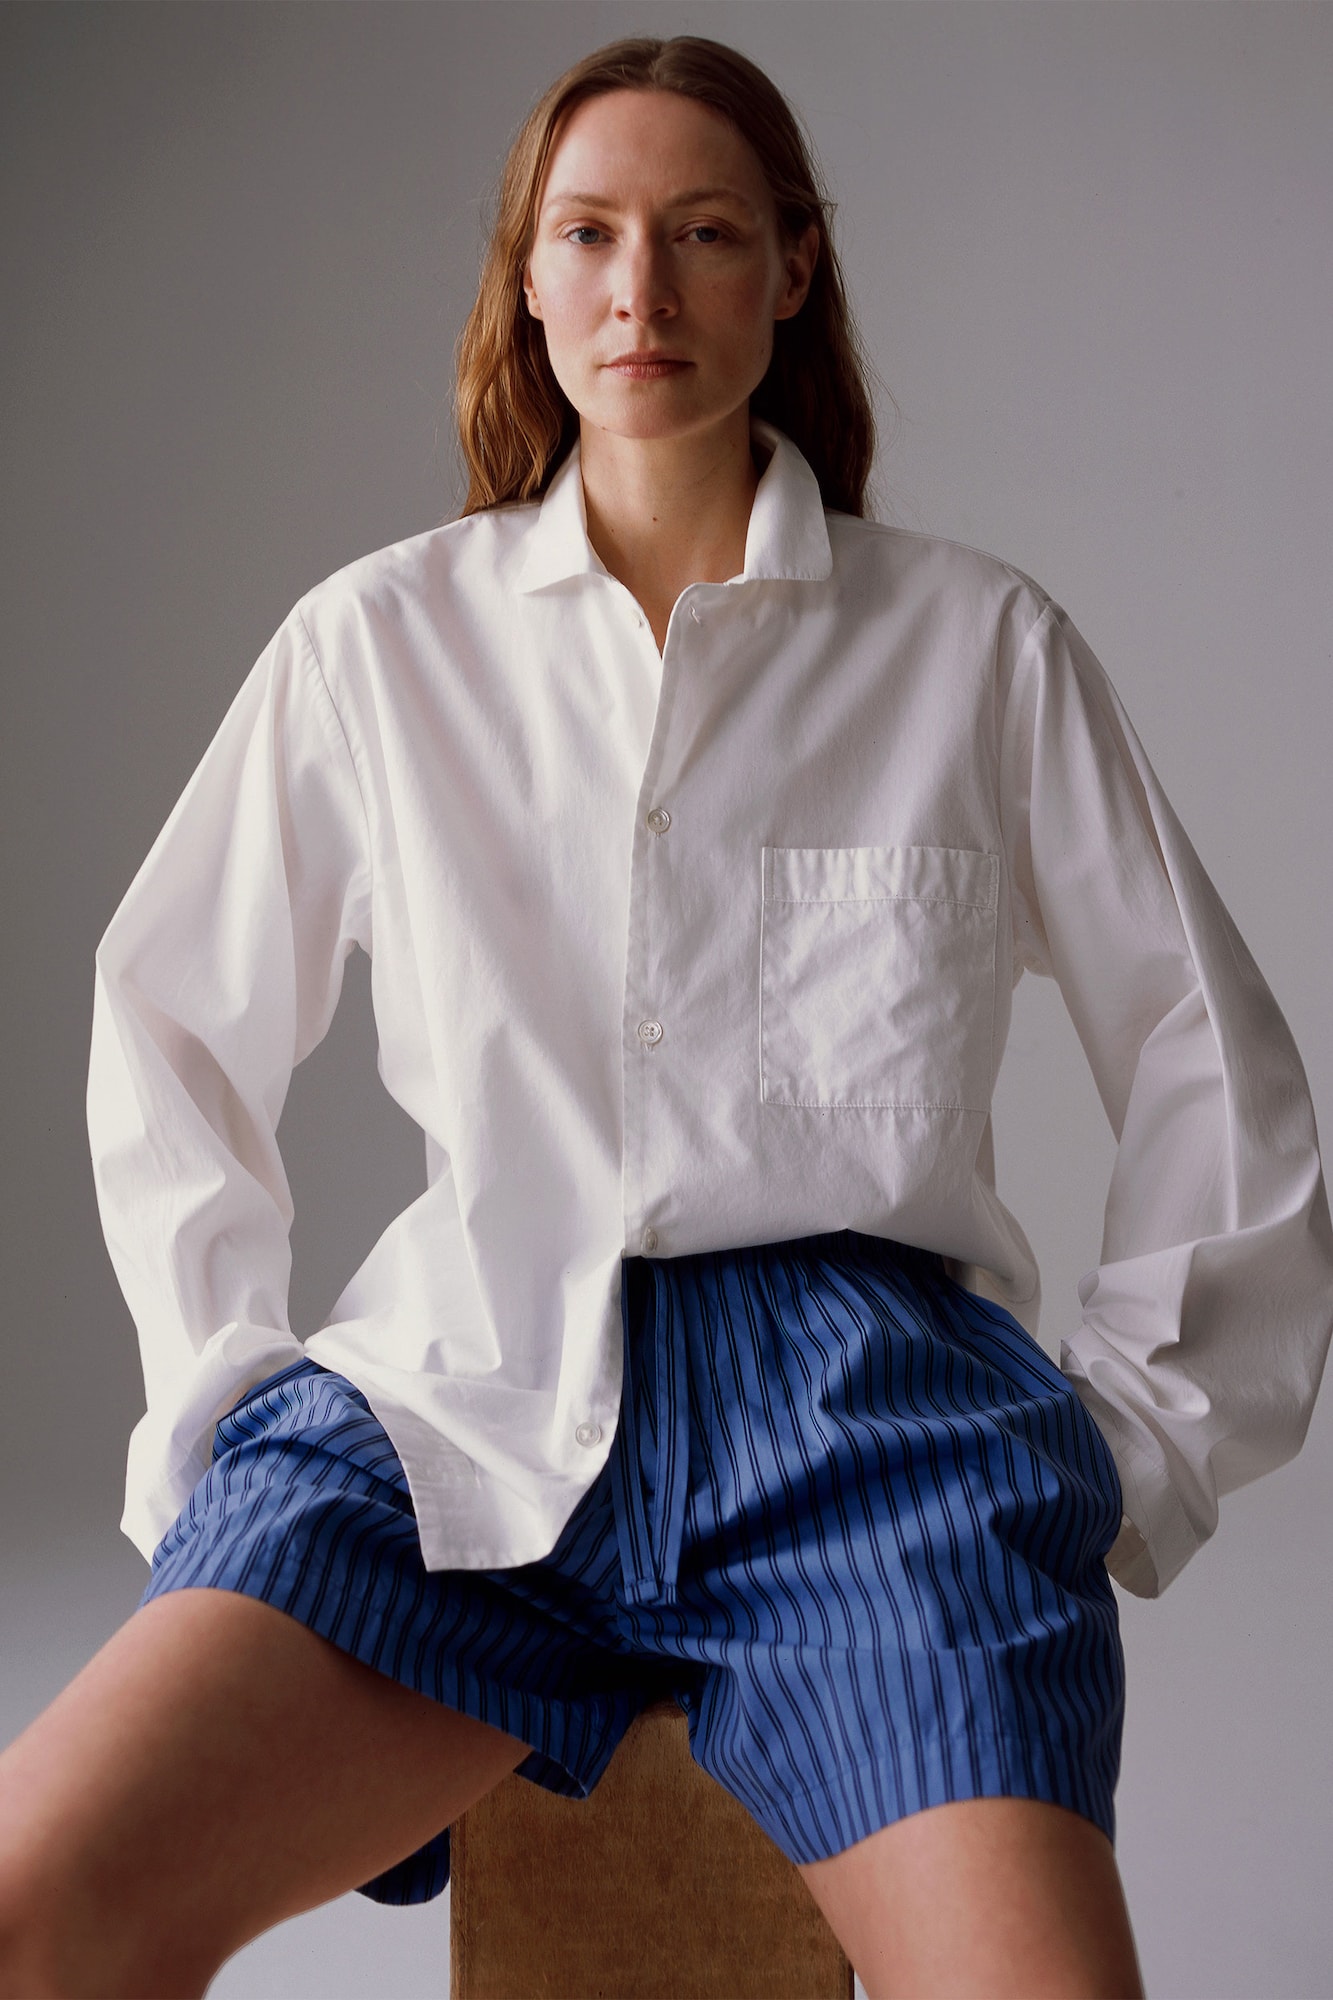 Tekla Spring/Summer Pyjamas Sleepwear Lookbook Shirts Shorts